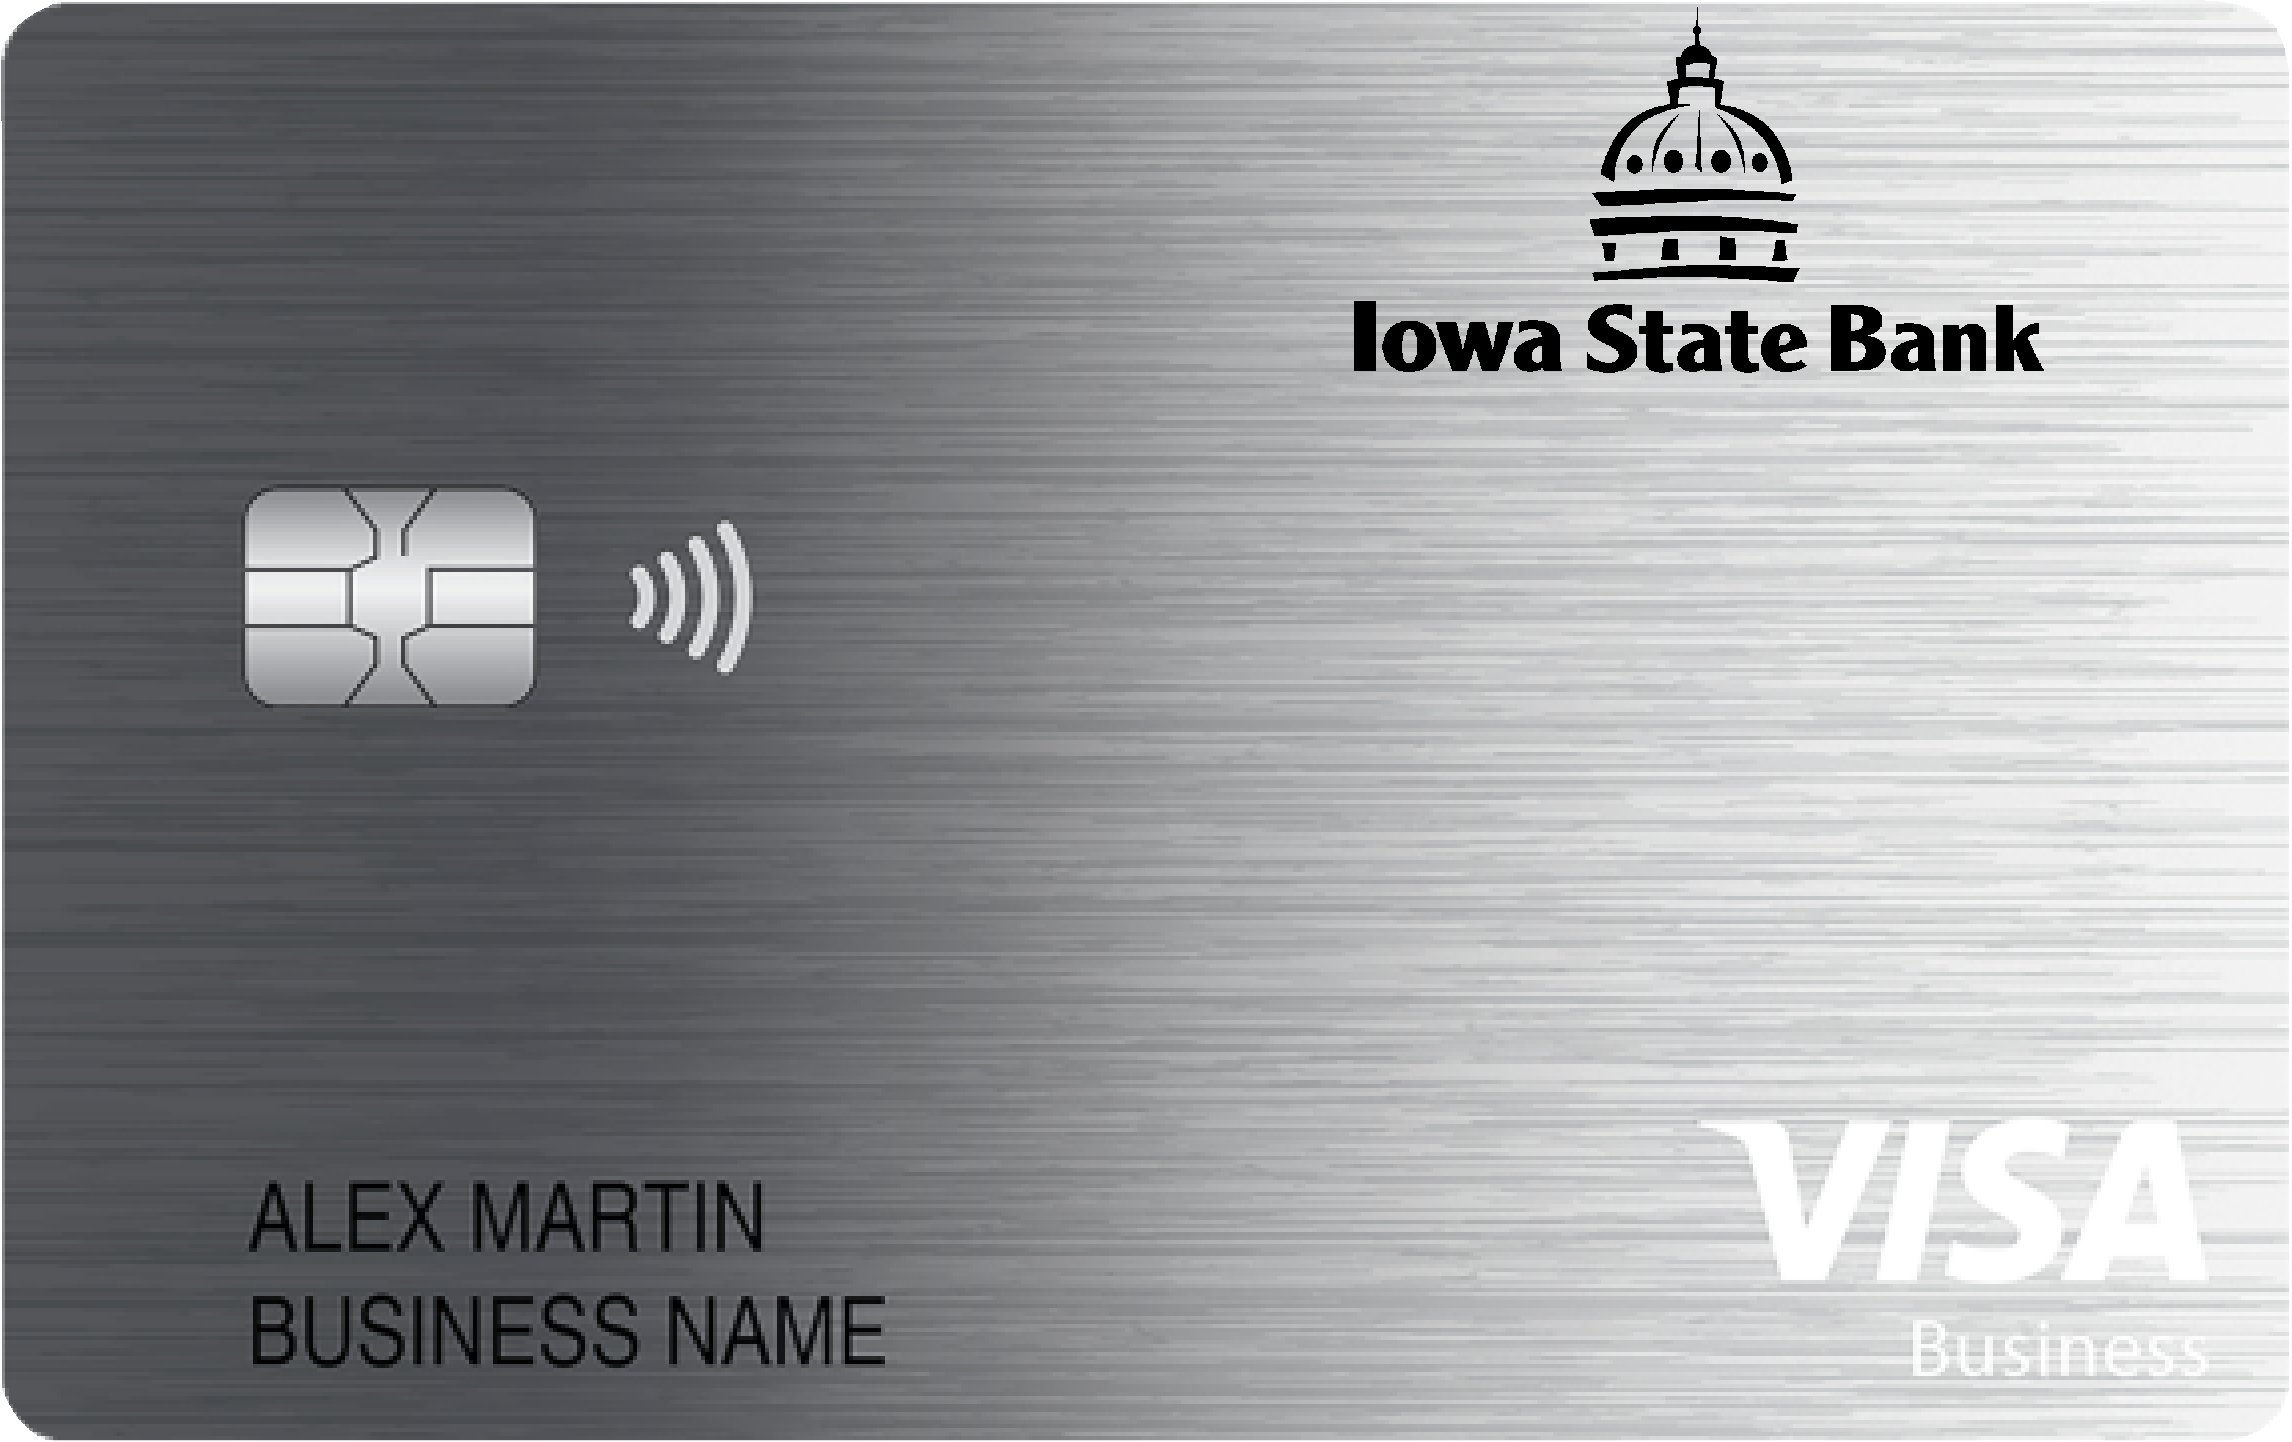 Iowa State Bank Business Cash Preferred Card